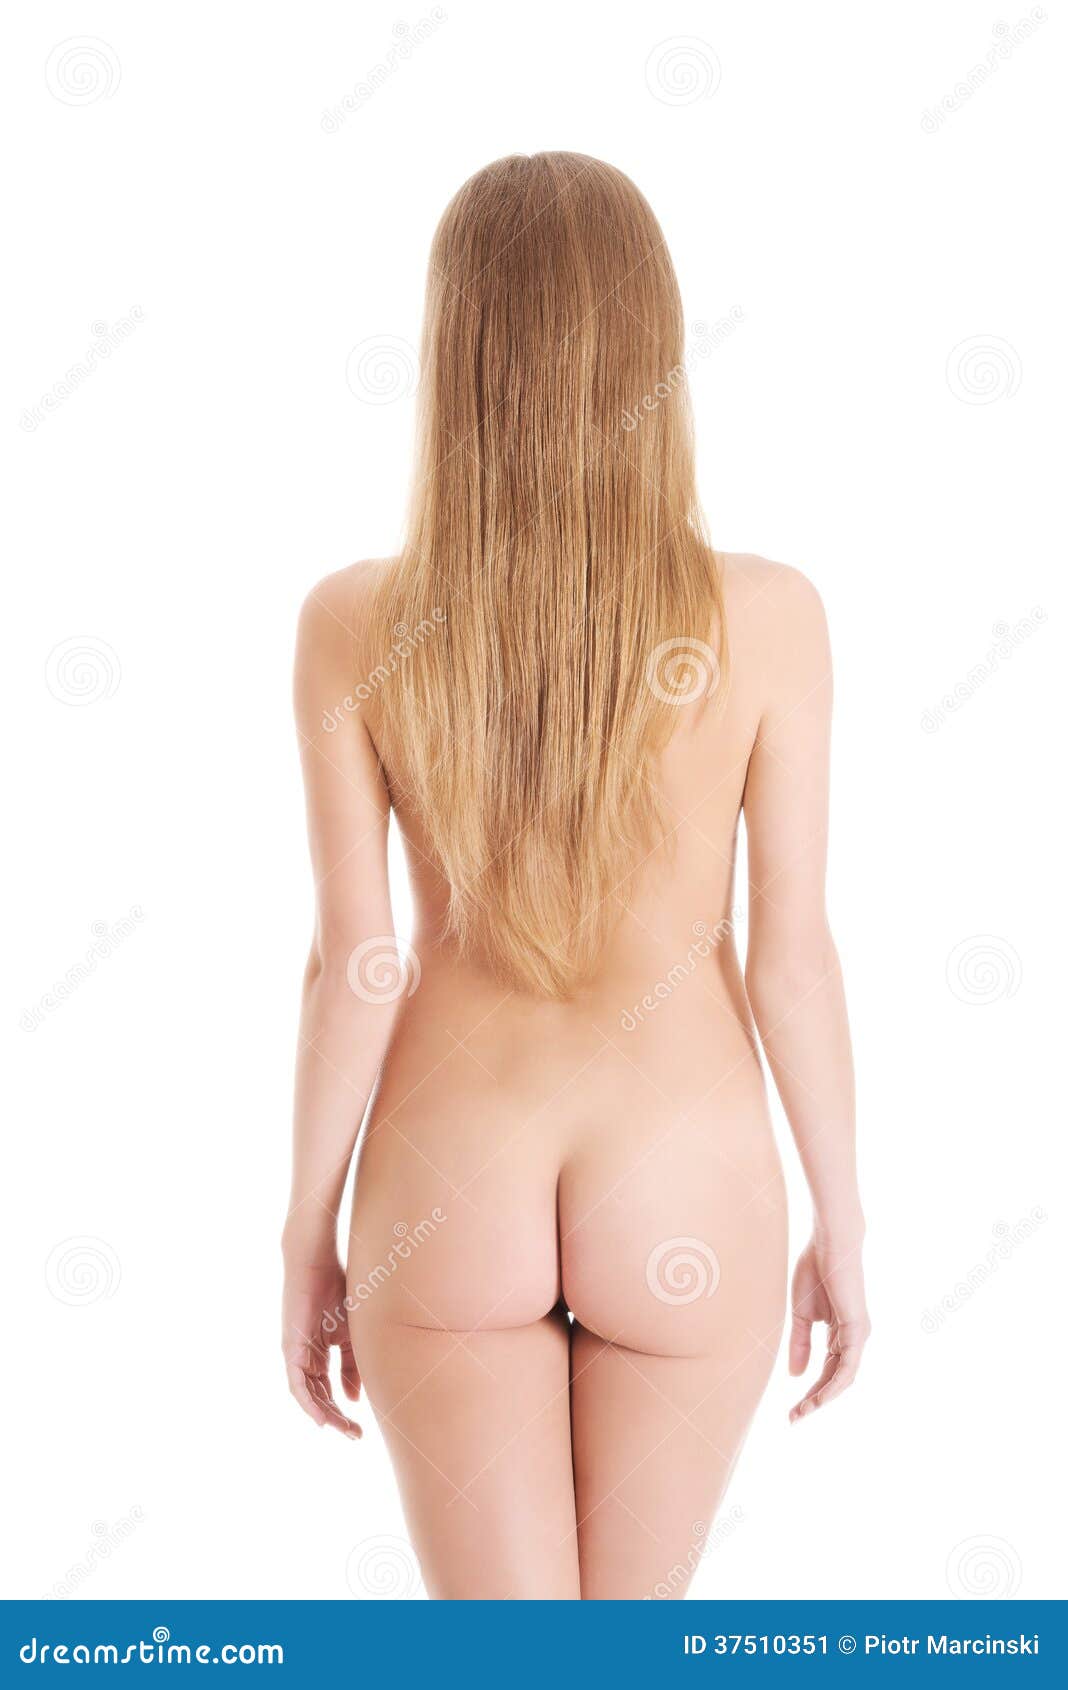 Female nude buttocks